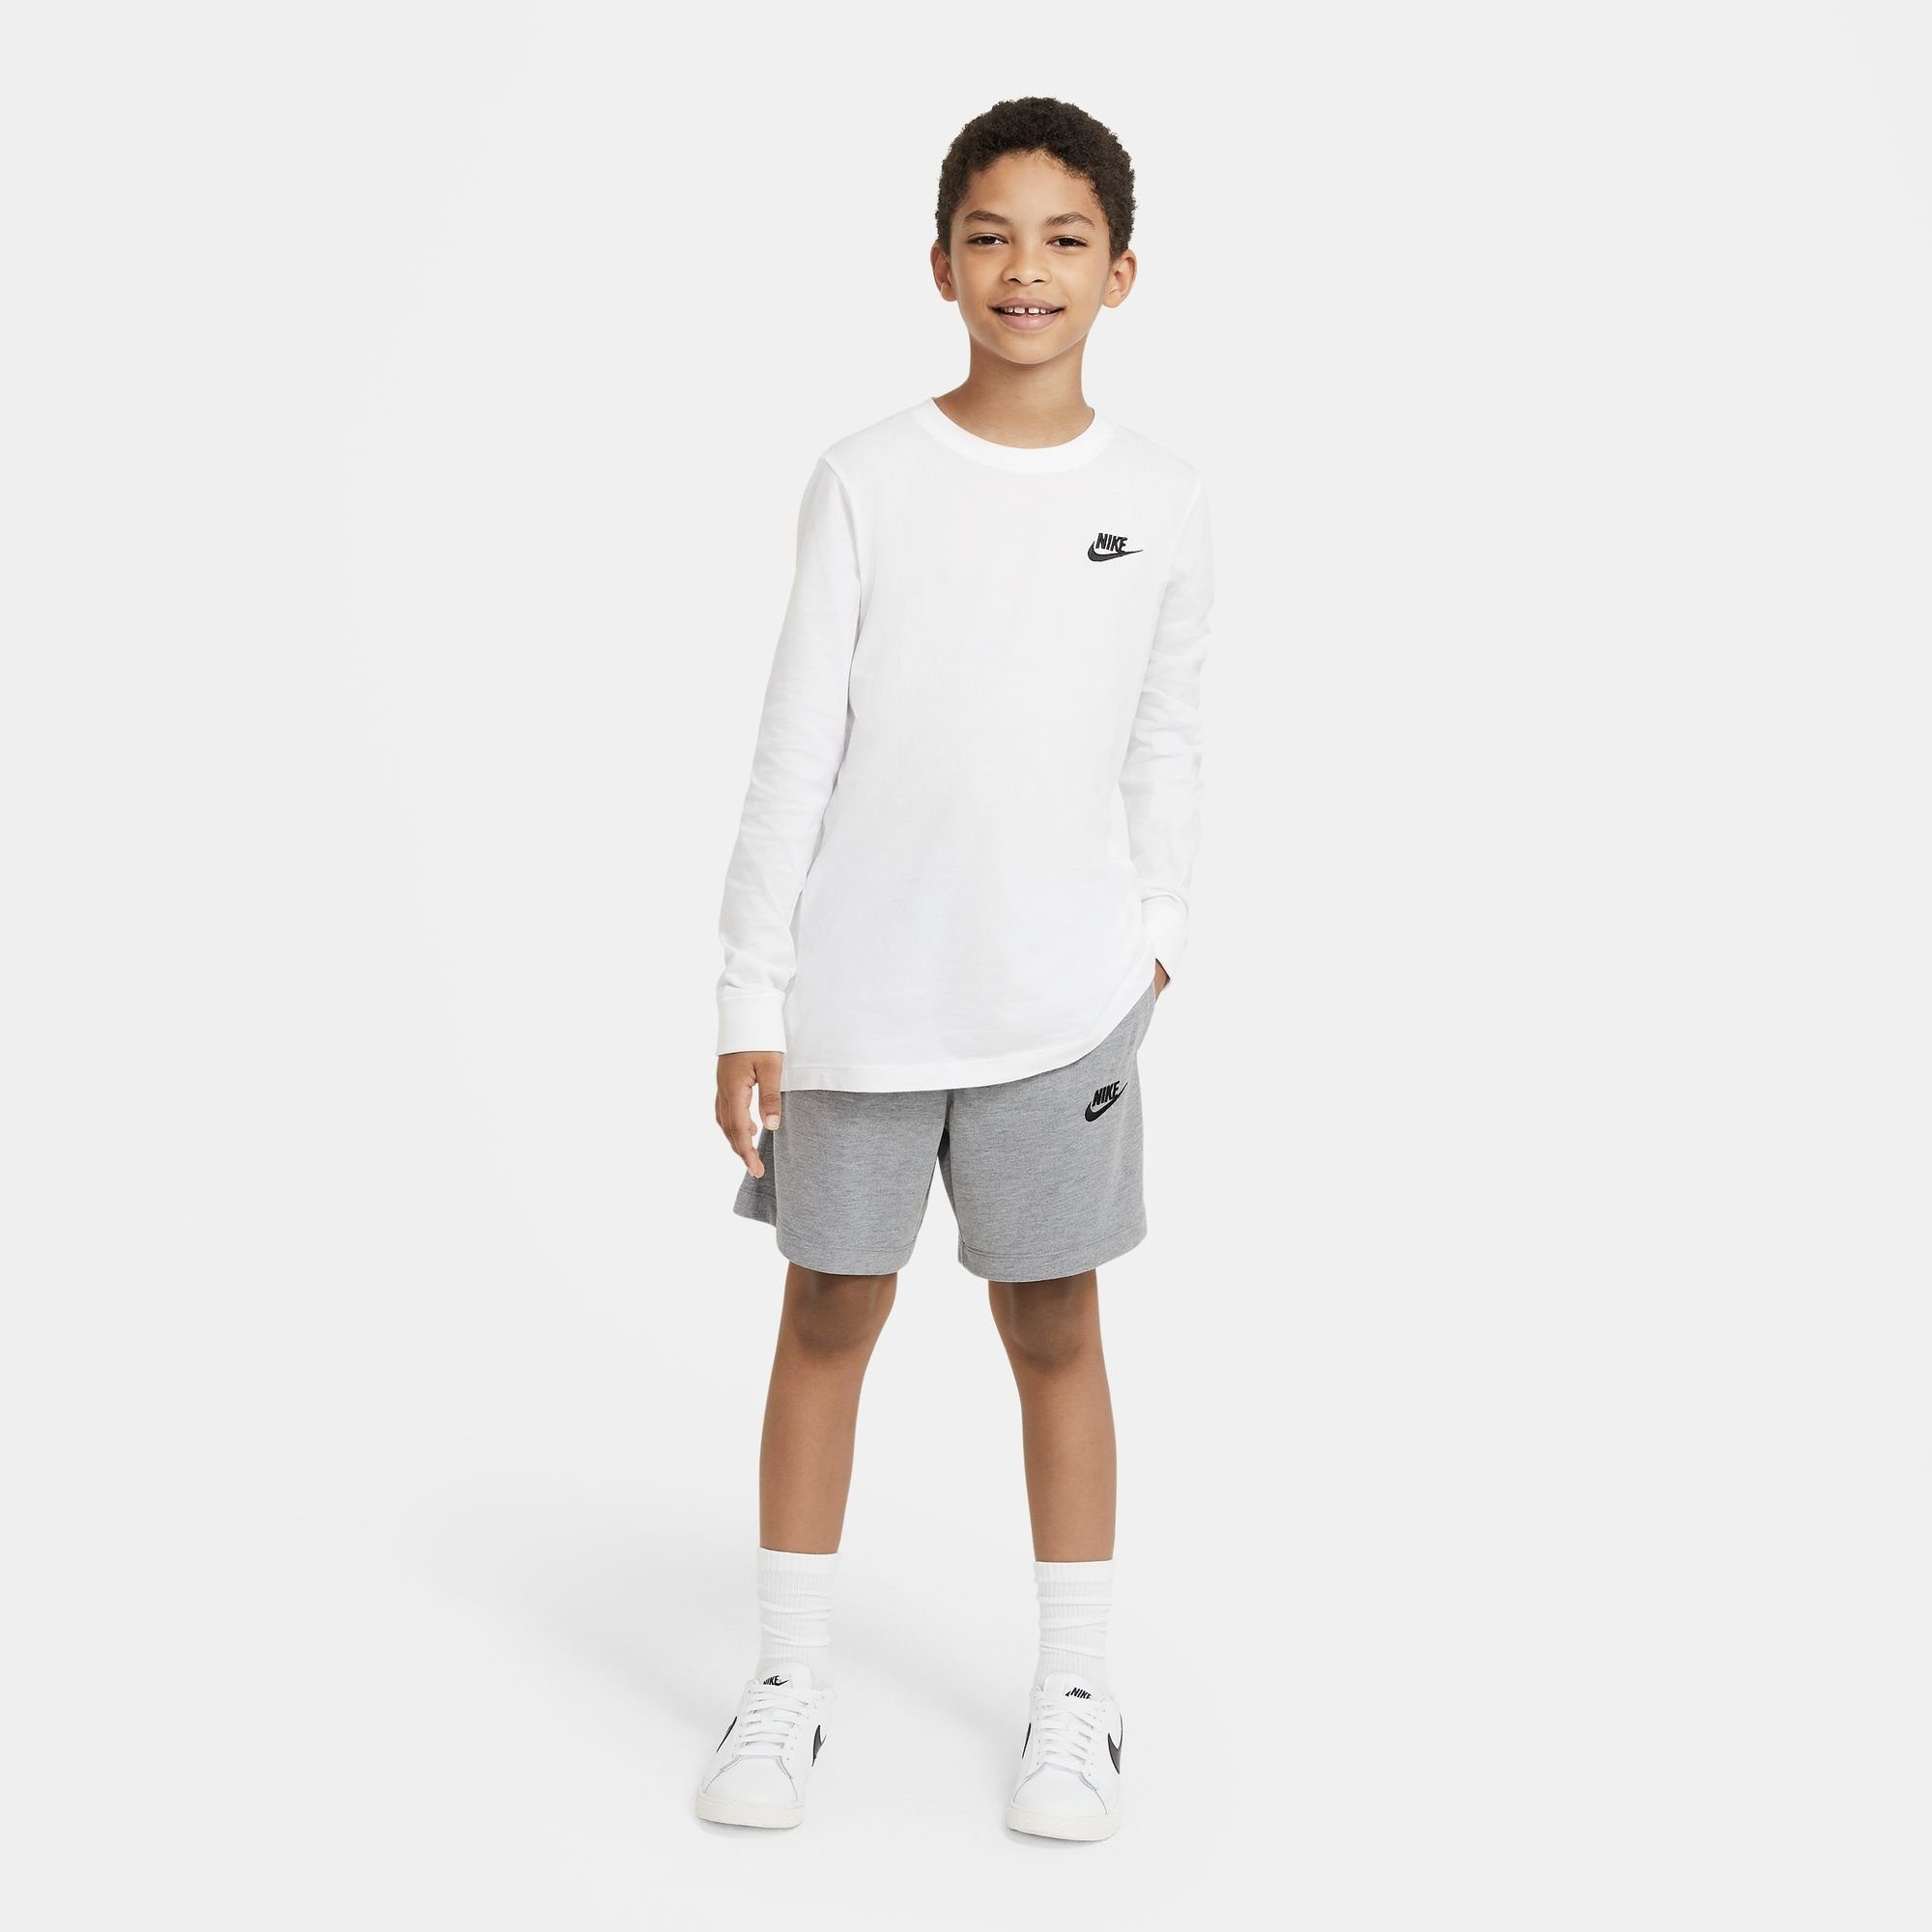 Nike Sportswear Shorts KIDS' (BOYS) SHORTS grau JERSEY BIG